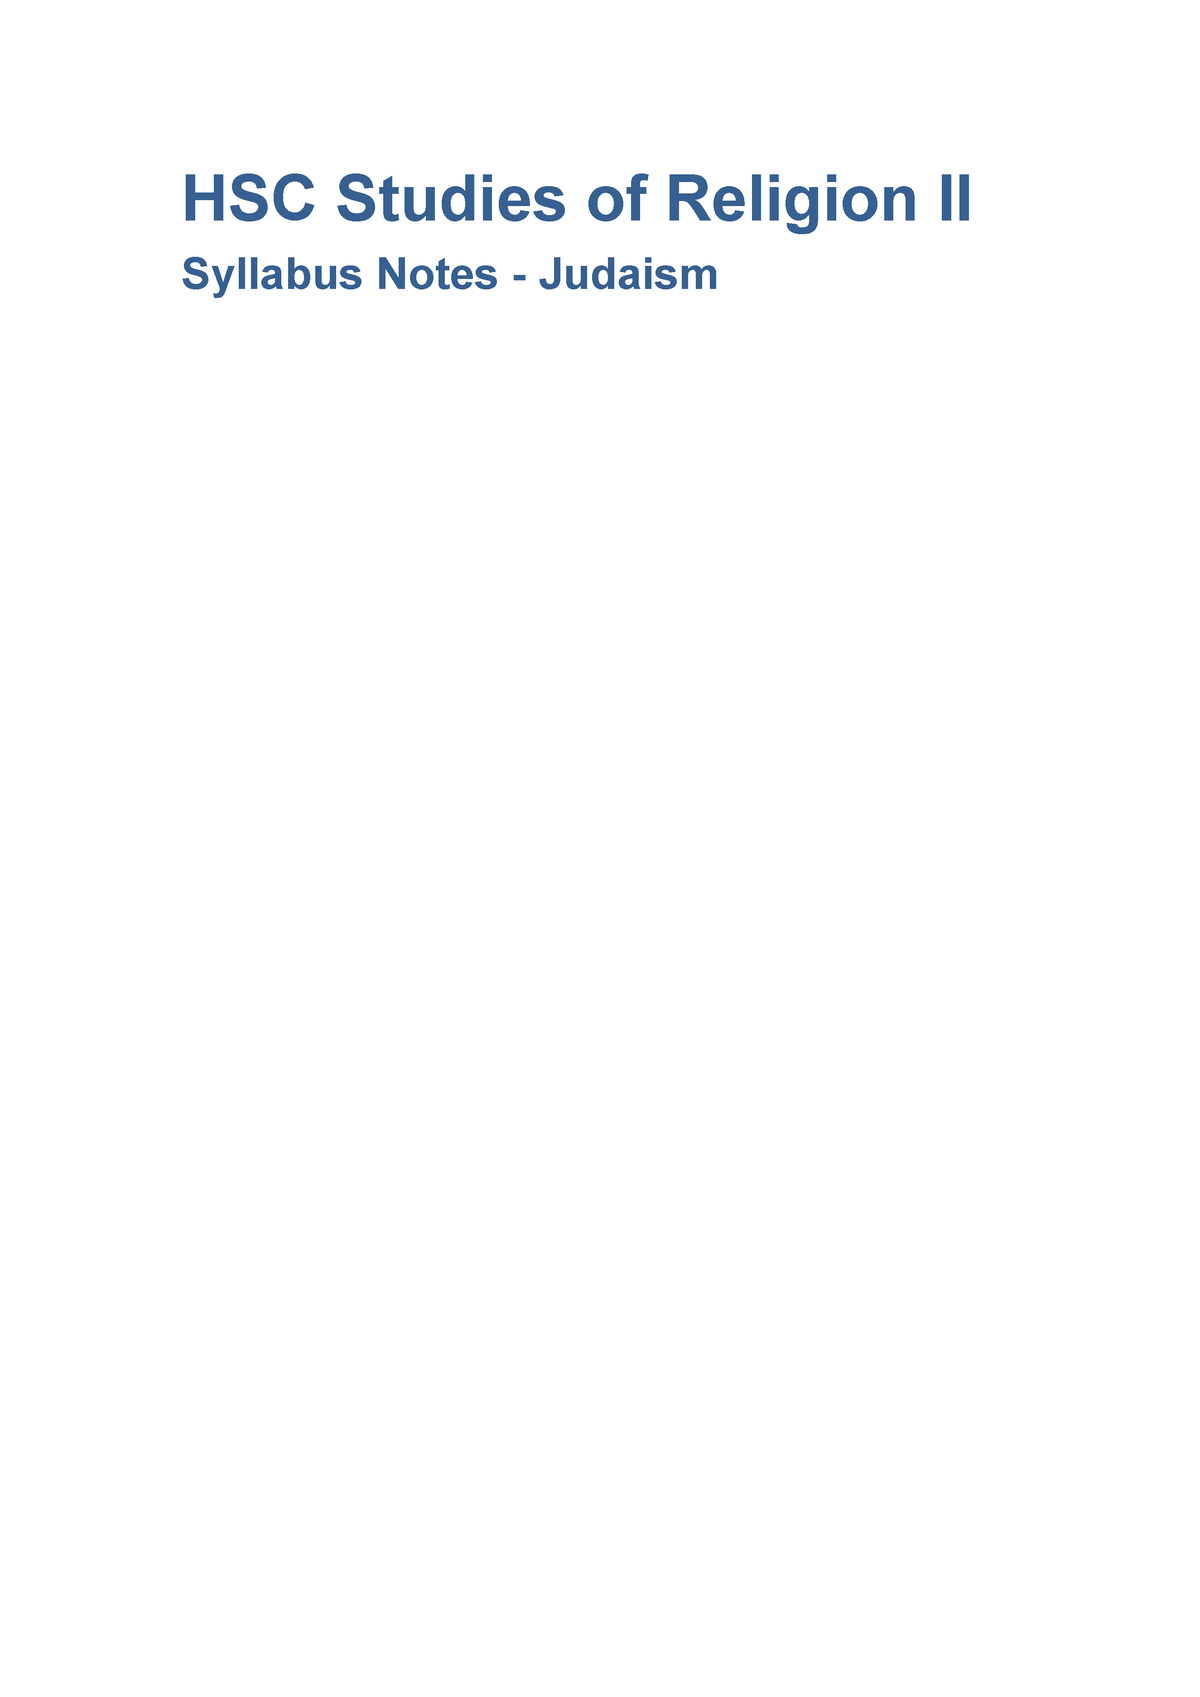 judaism environmental ethics essay